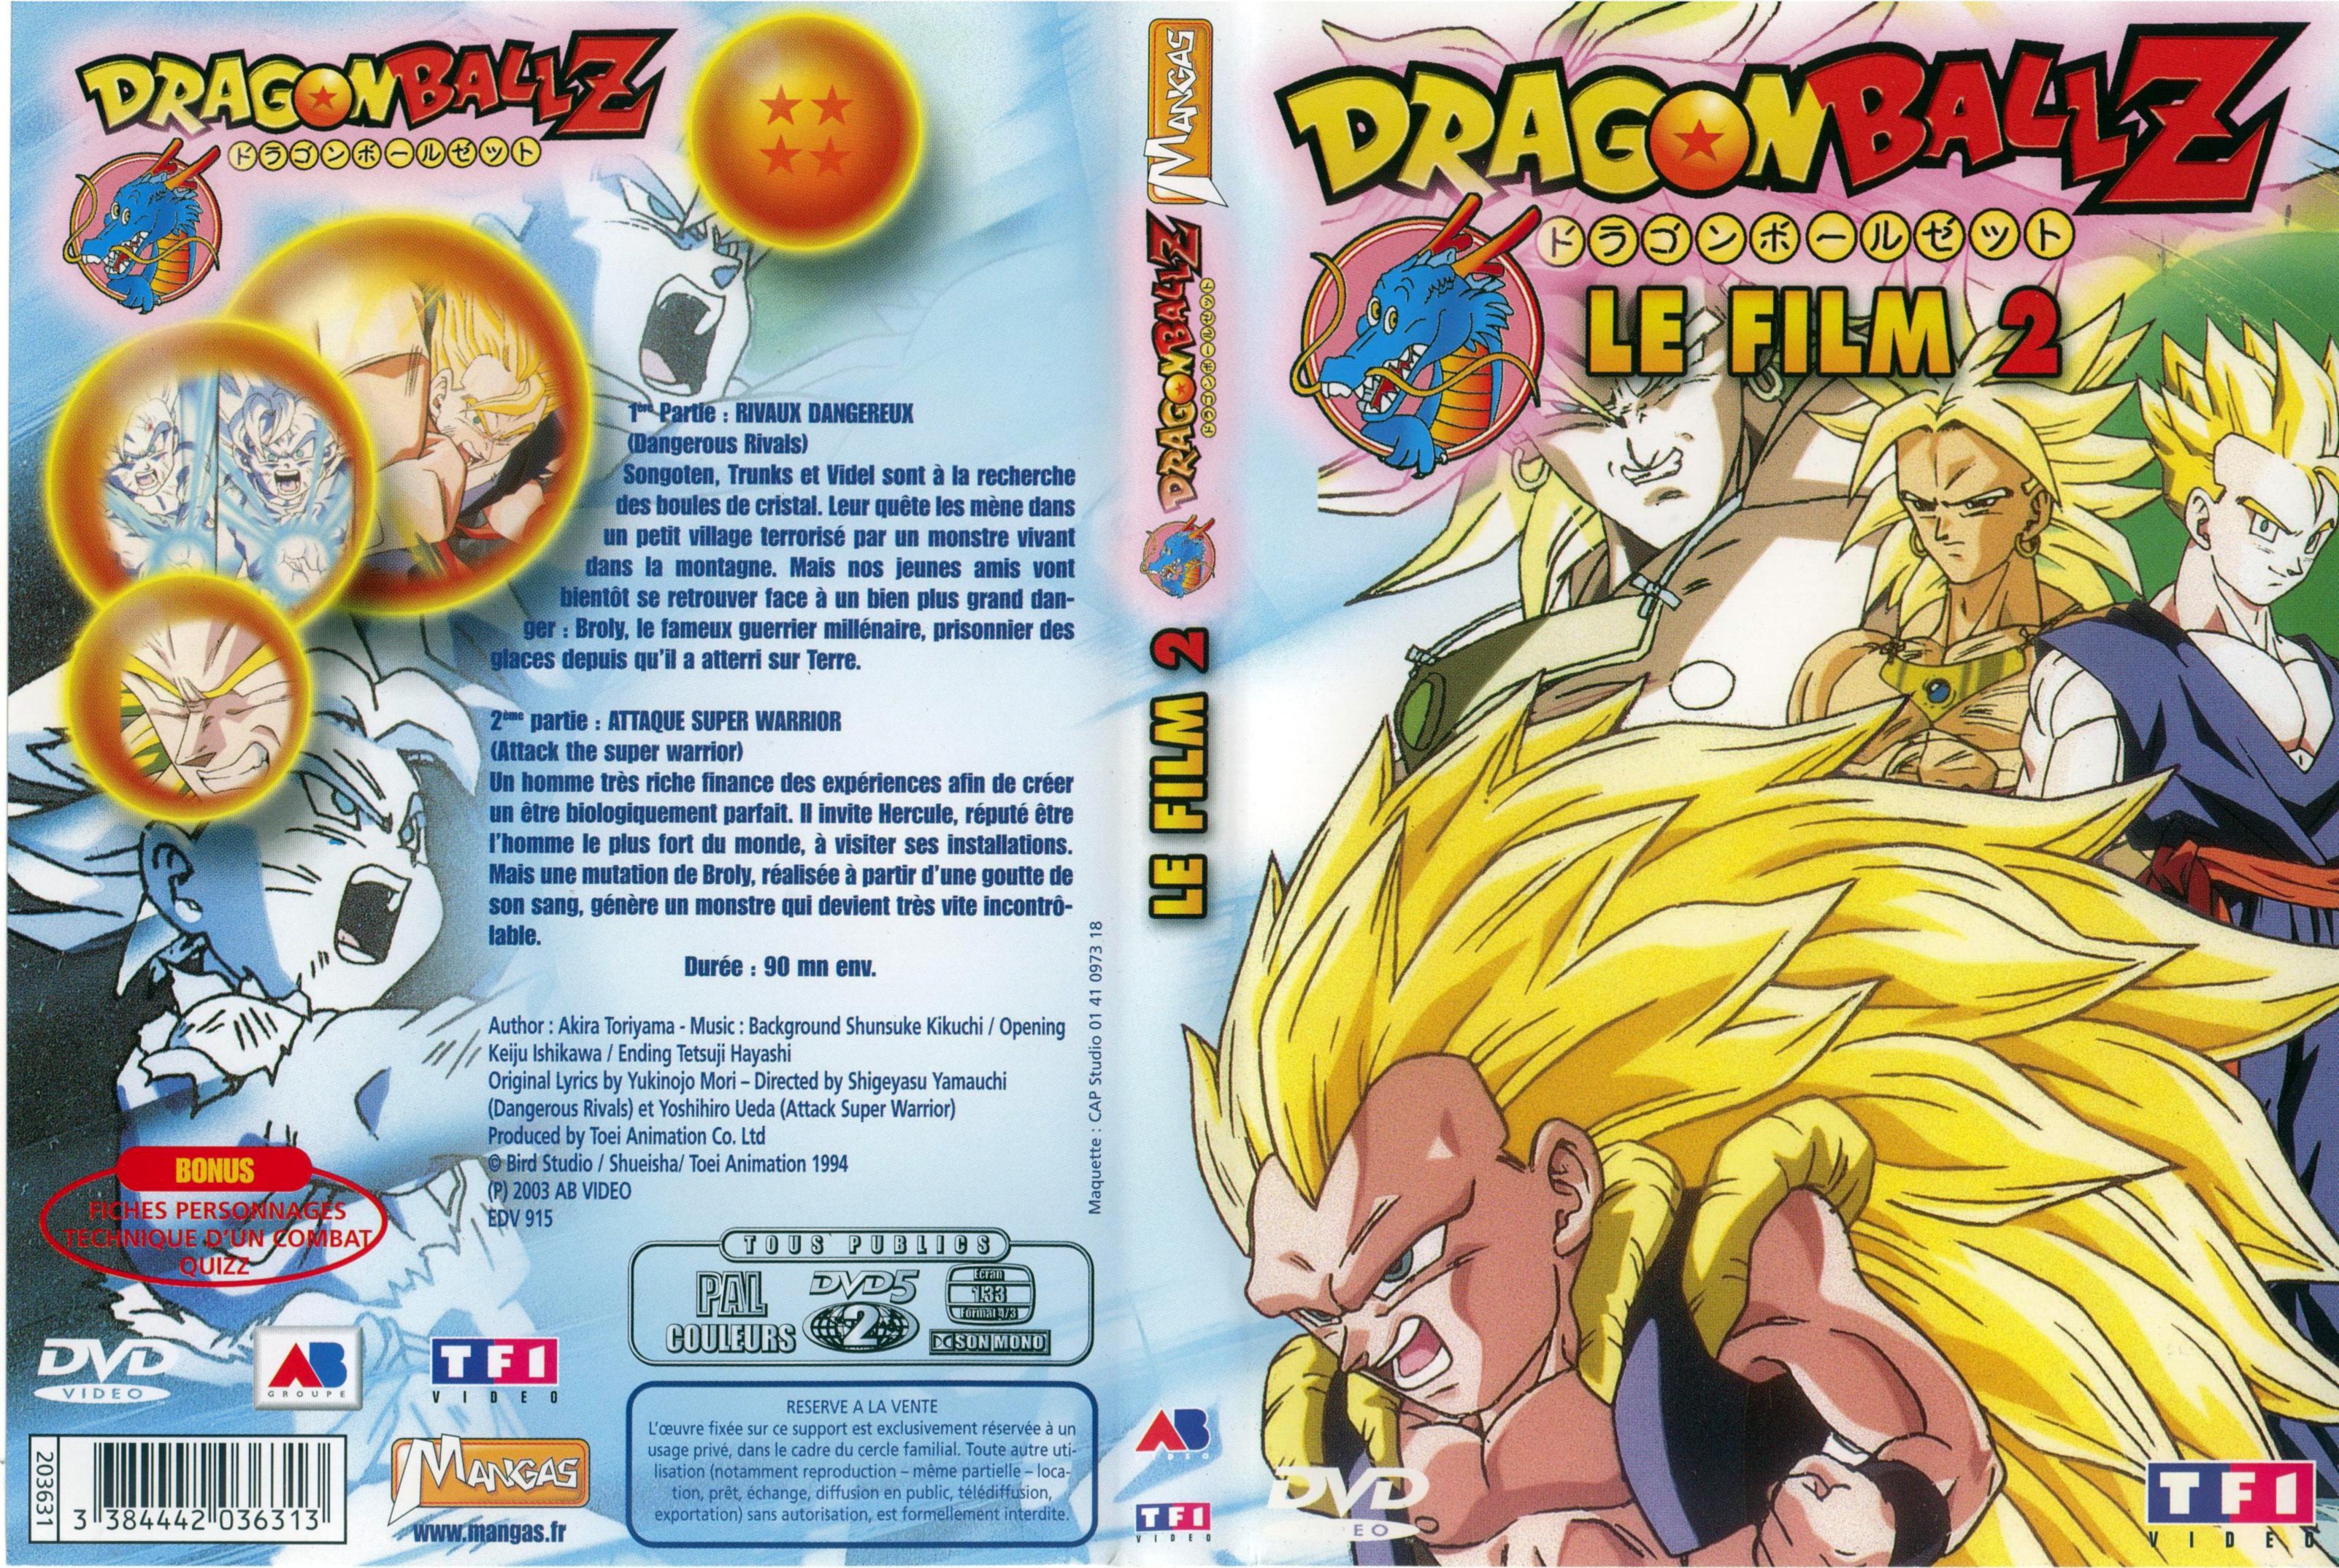 Jaquette DVD Dragon ball Z le film 2